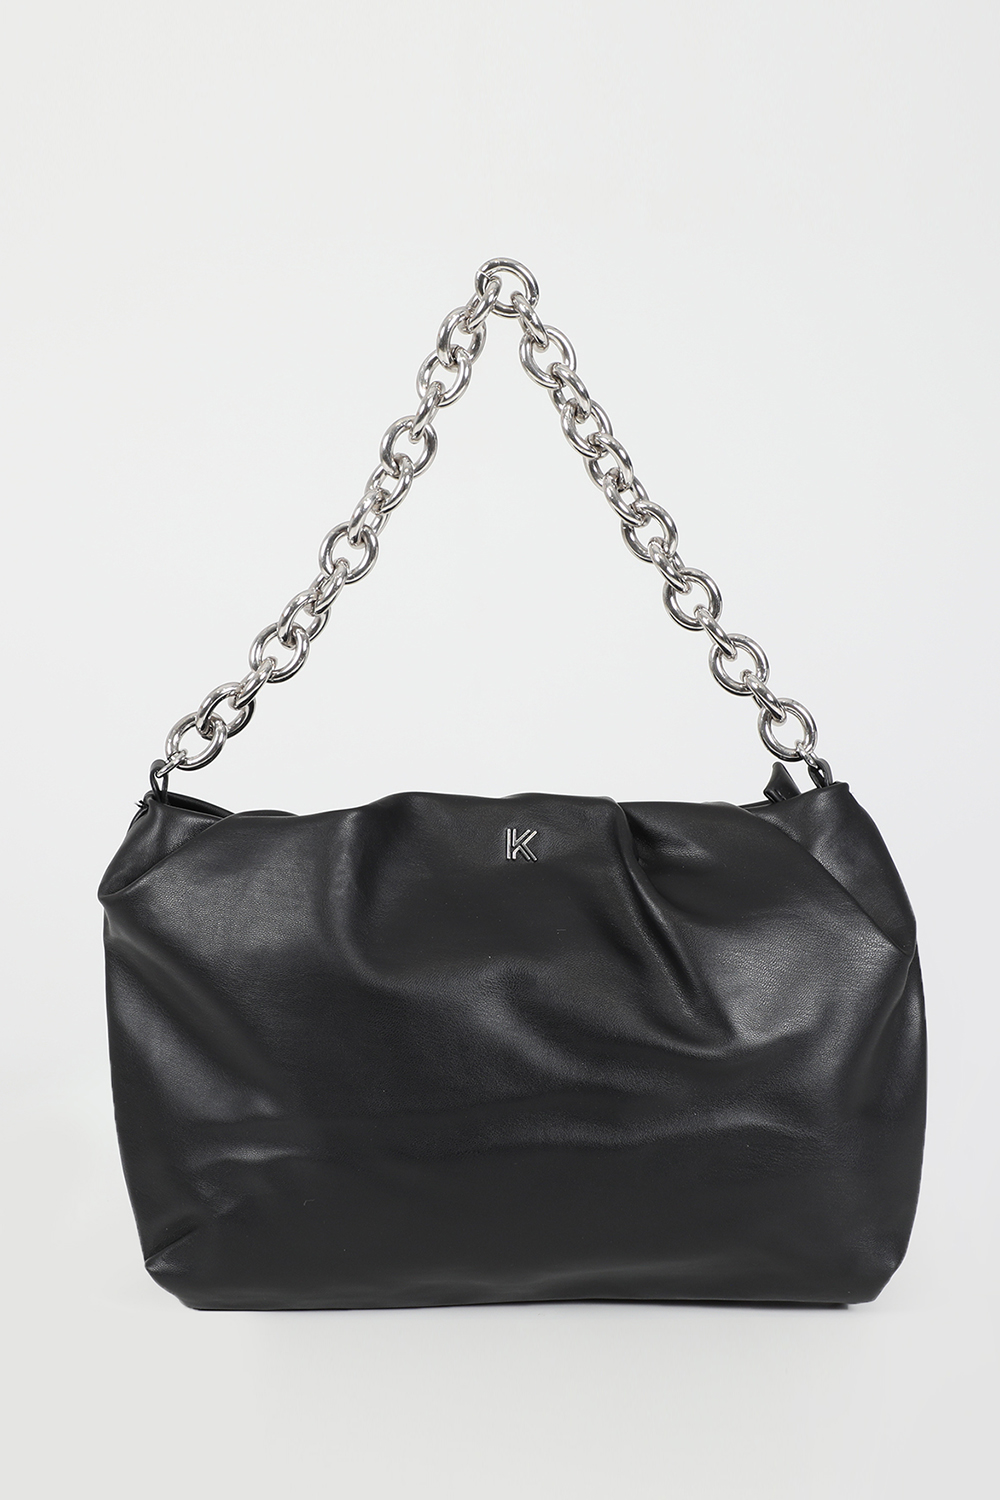 KENDALL + KYLIE – Γυναικεία τσάντα ώμου KENDALL + KYLIE μαύρη 1825914.0-0371